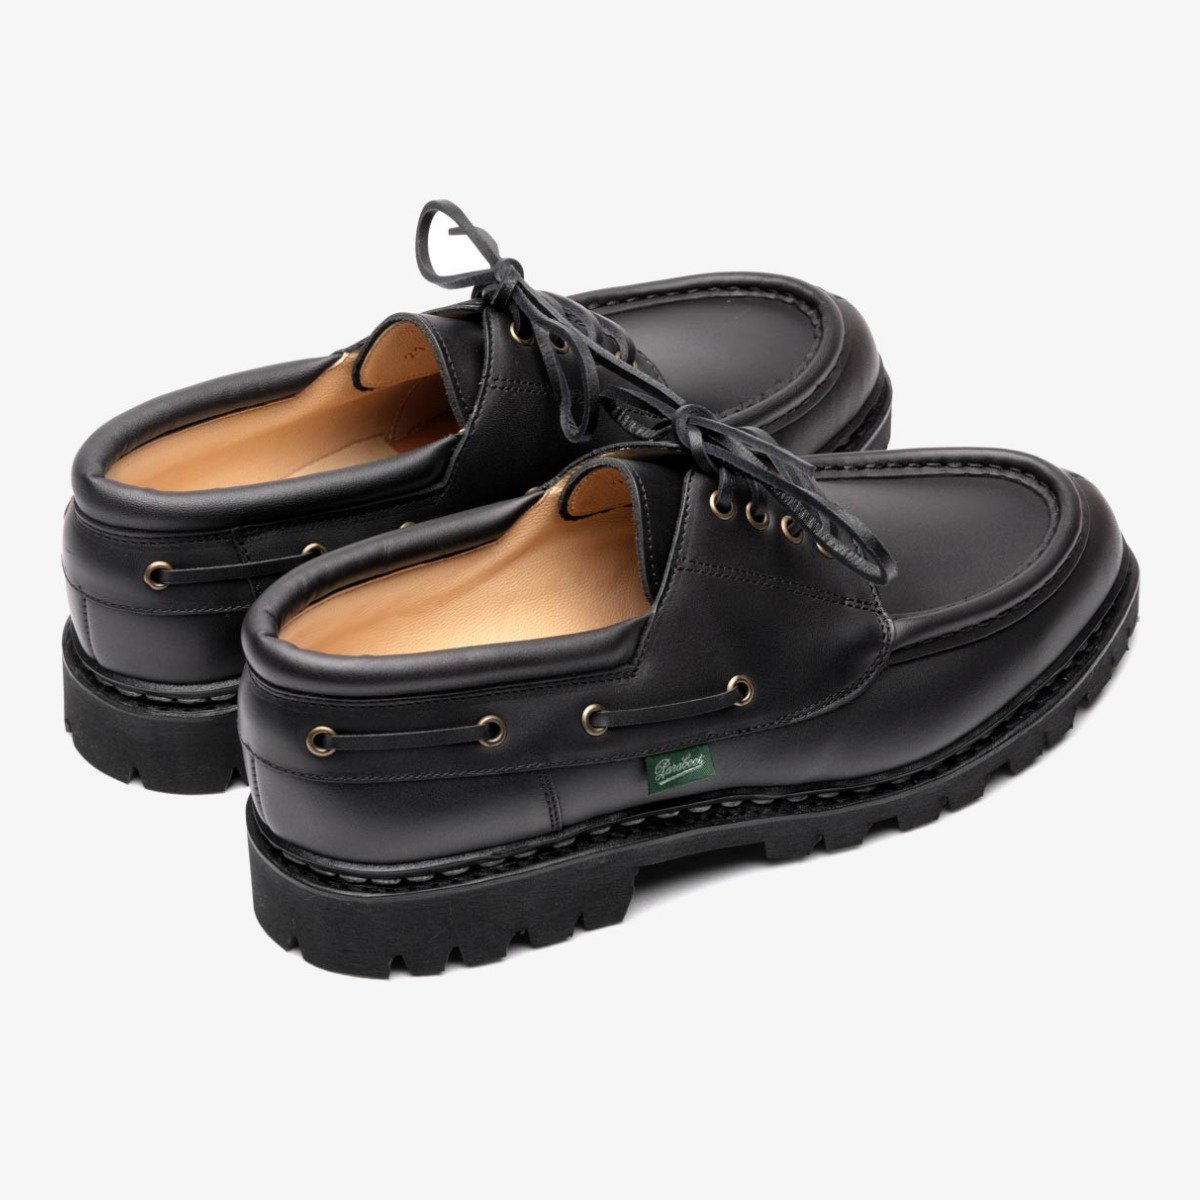 Paraboot Chimey noir ink moc toe boat shoes